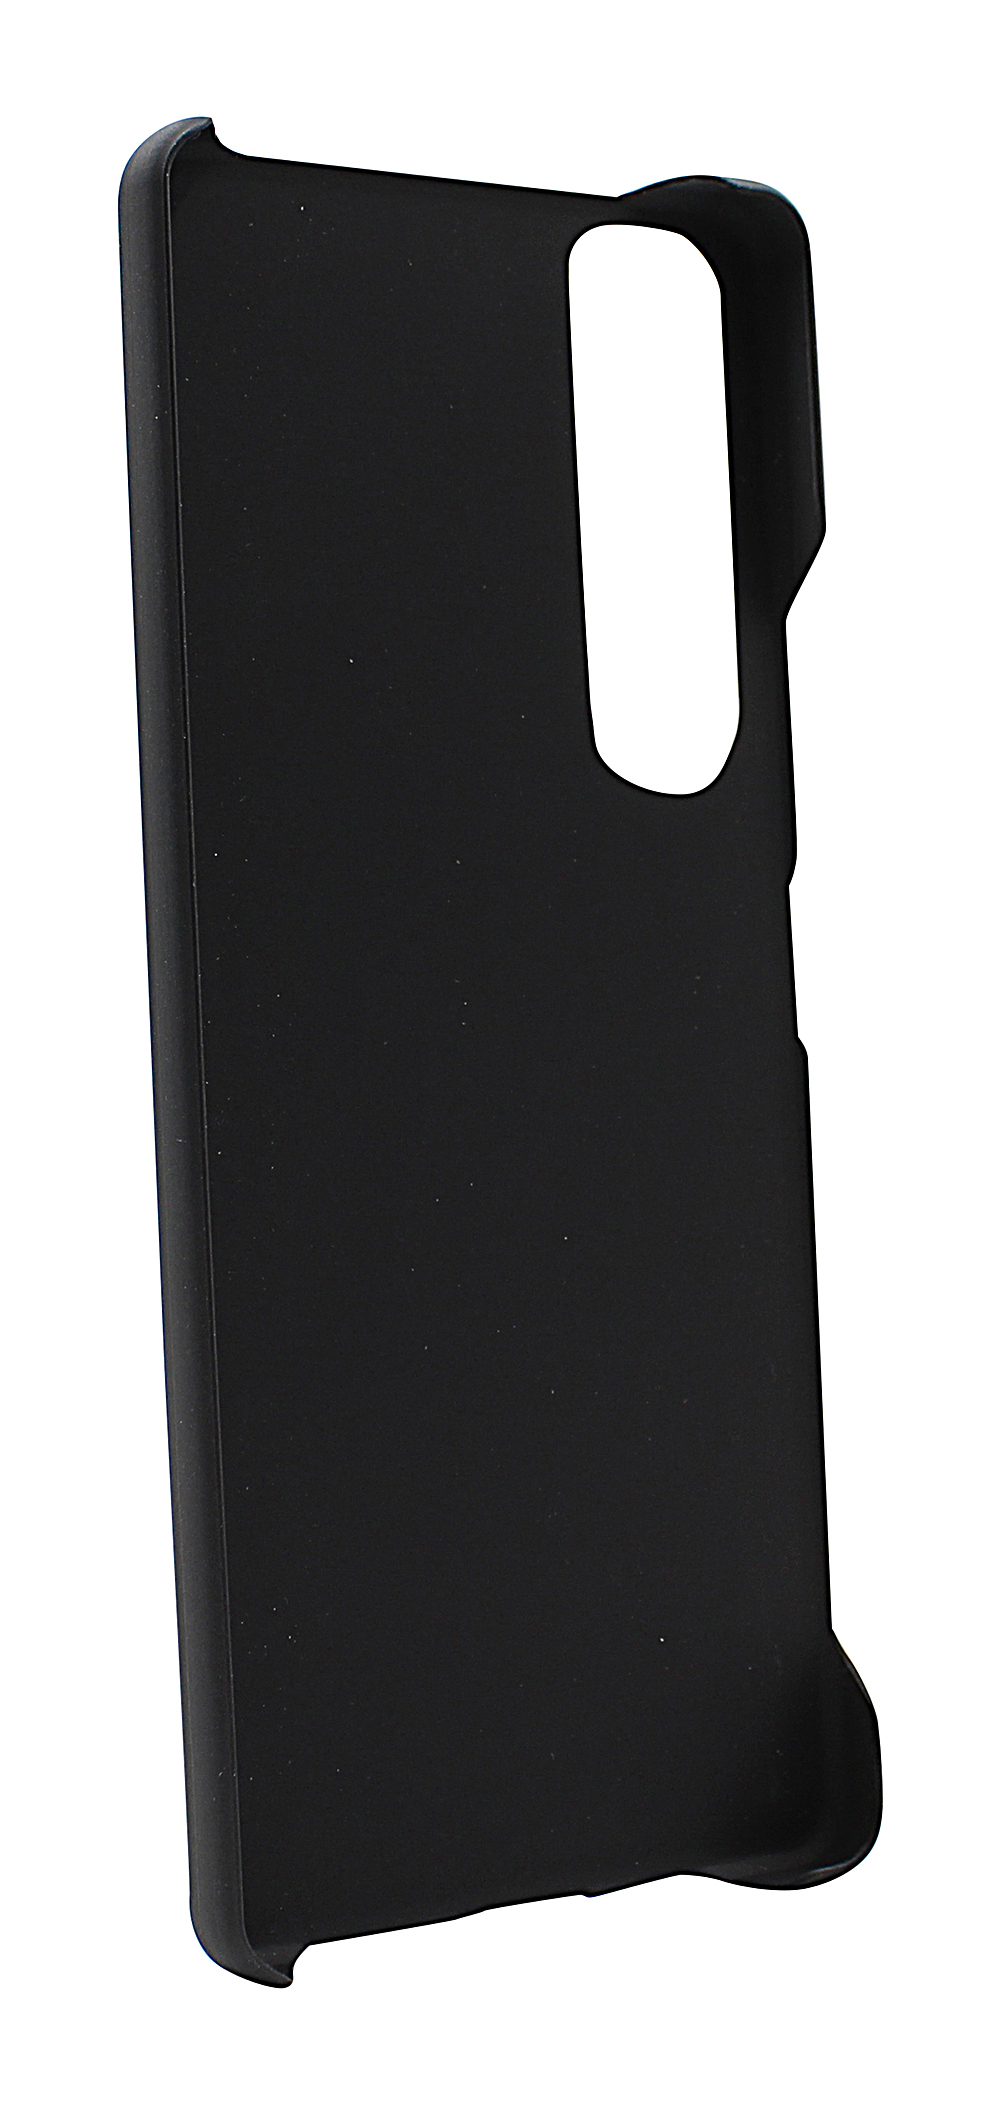 CoverIn Skimblocker Design Magneettilompakko Sony Xperia 1 III (XQ-BC52)